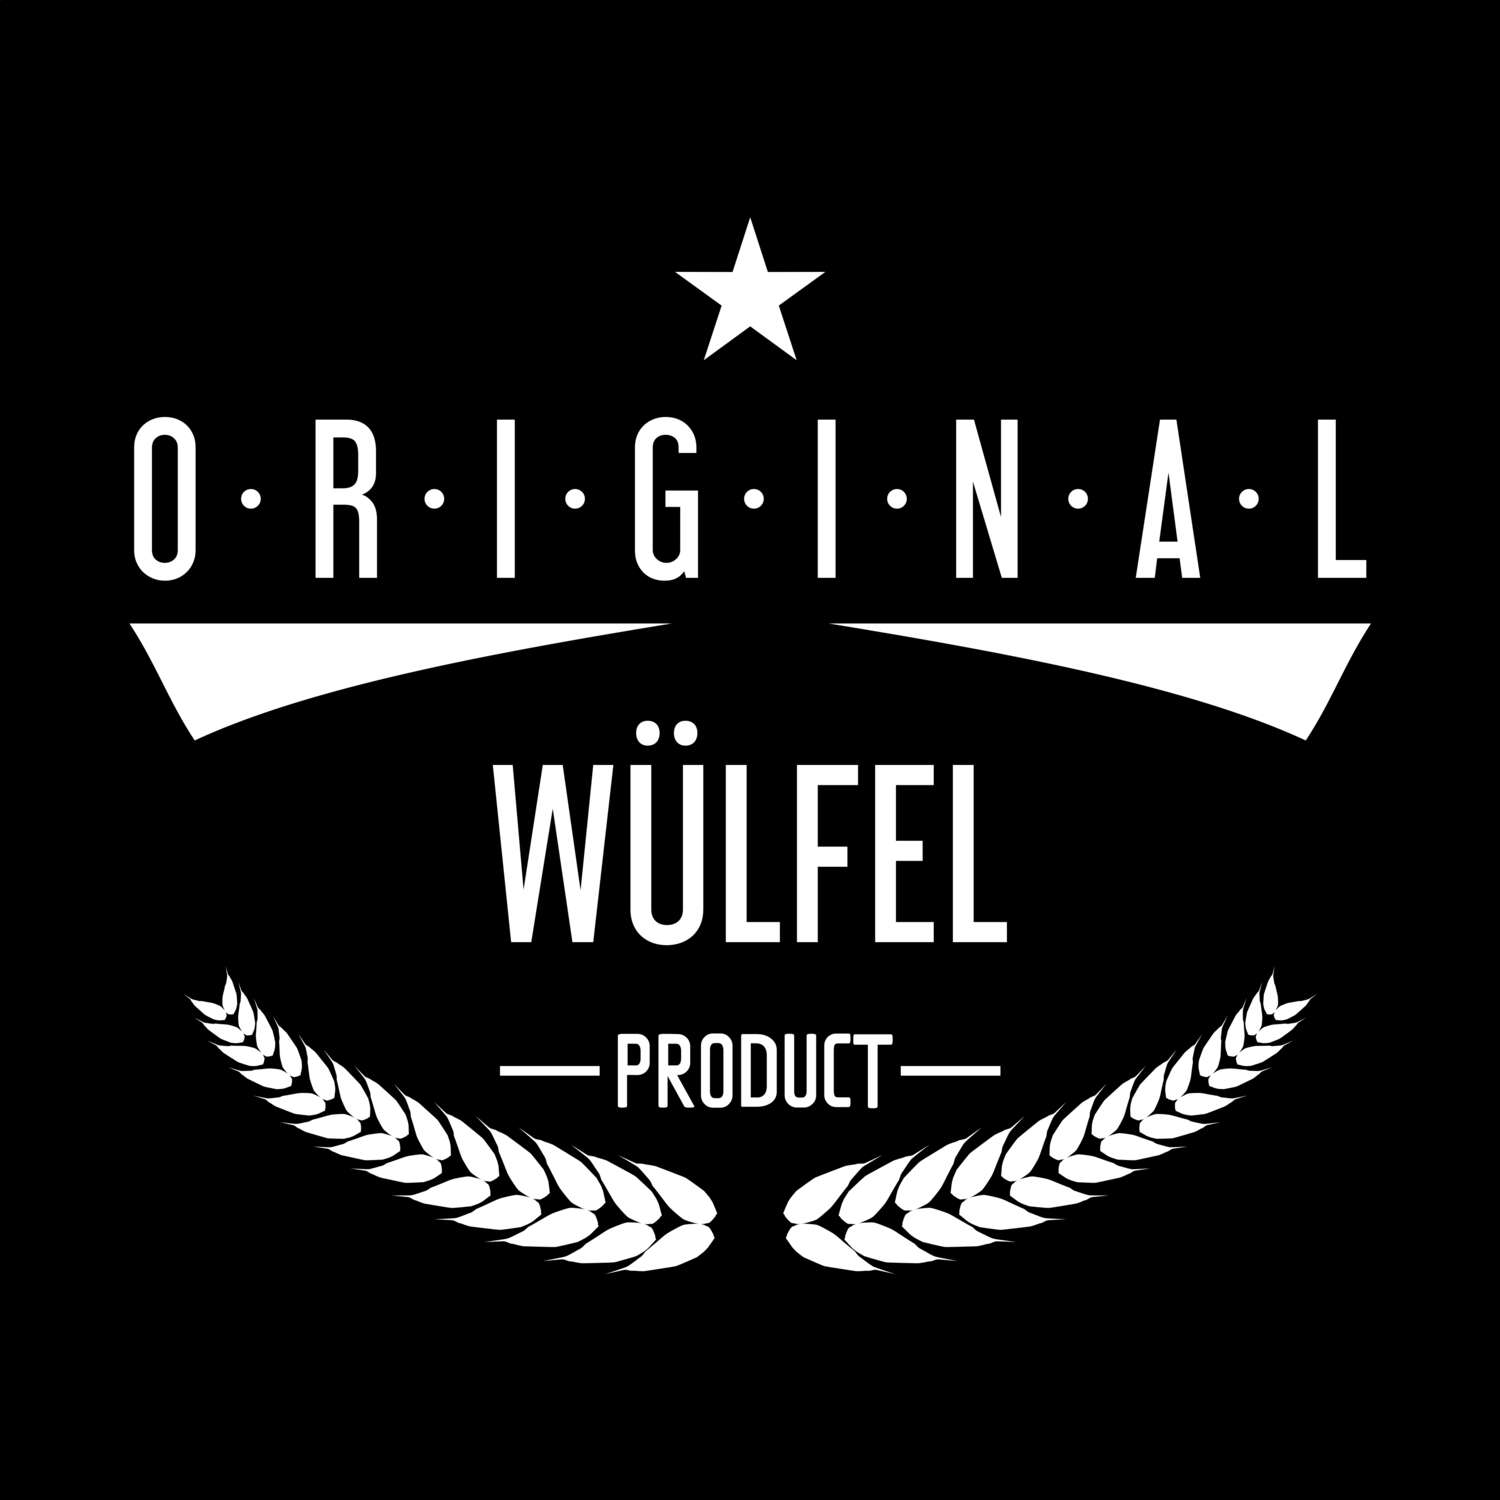 Wülfel T-Shirt »Original Product«